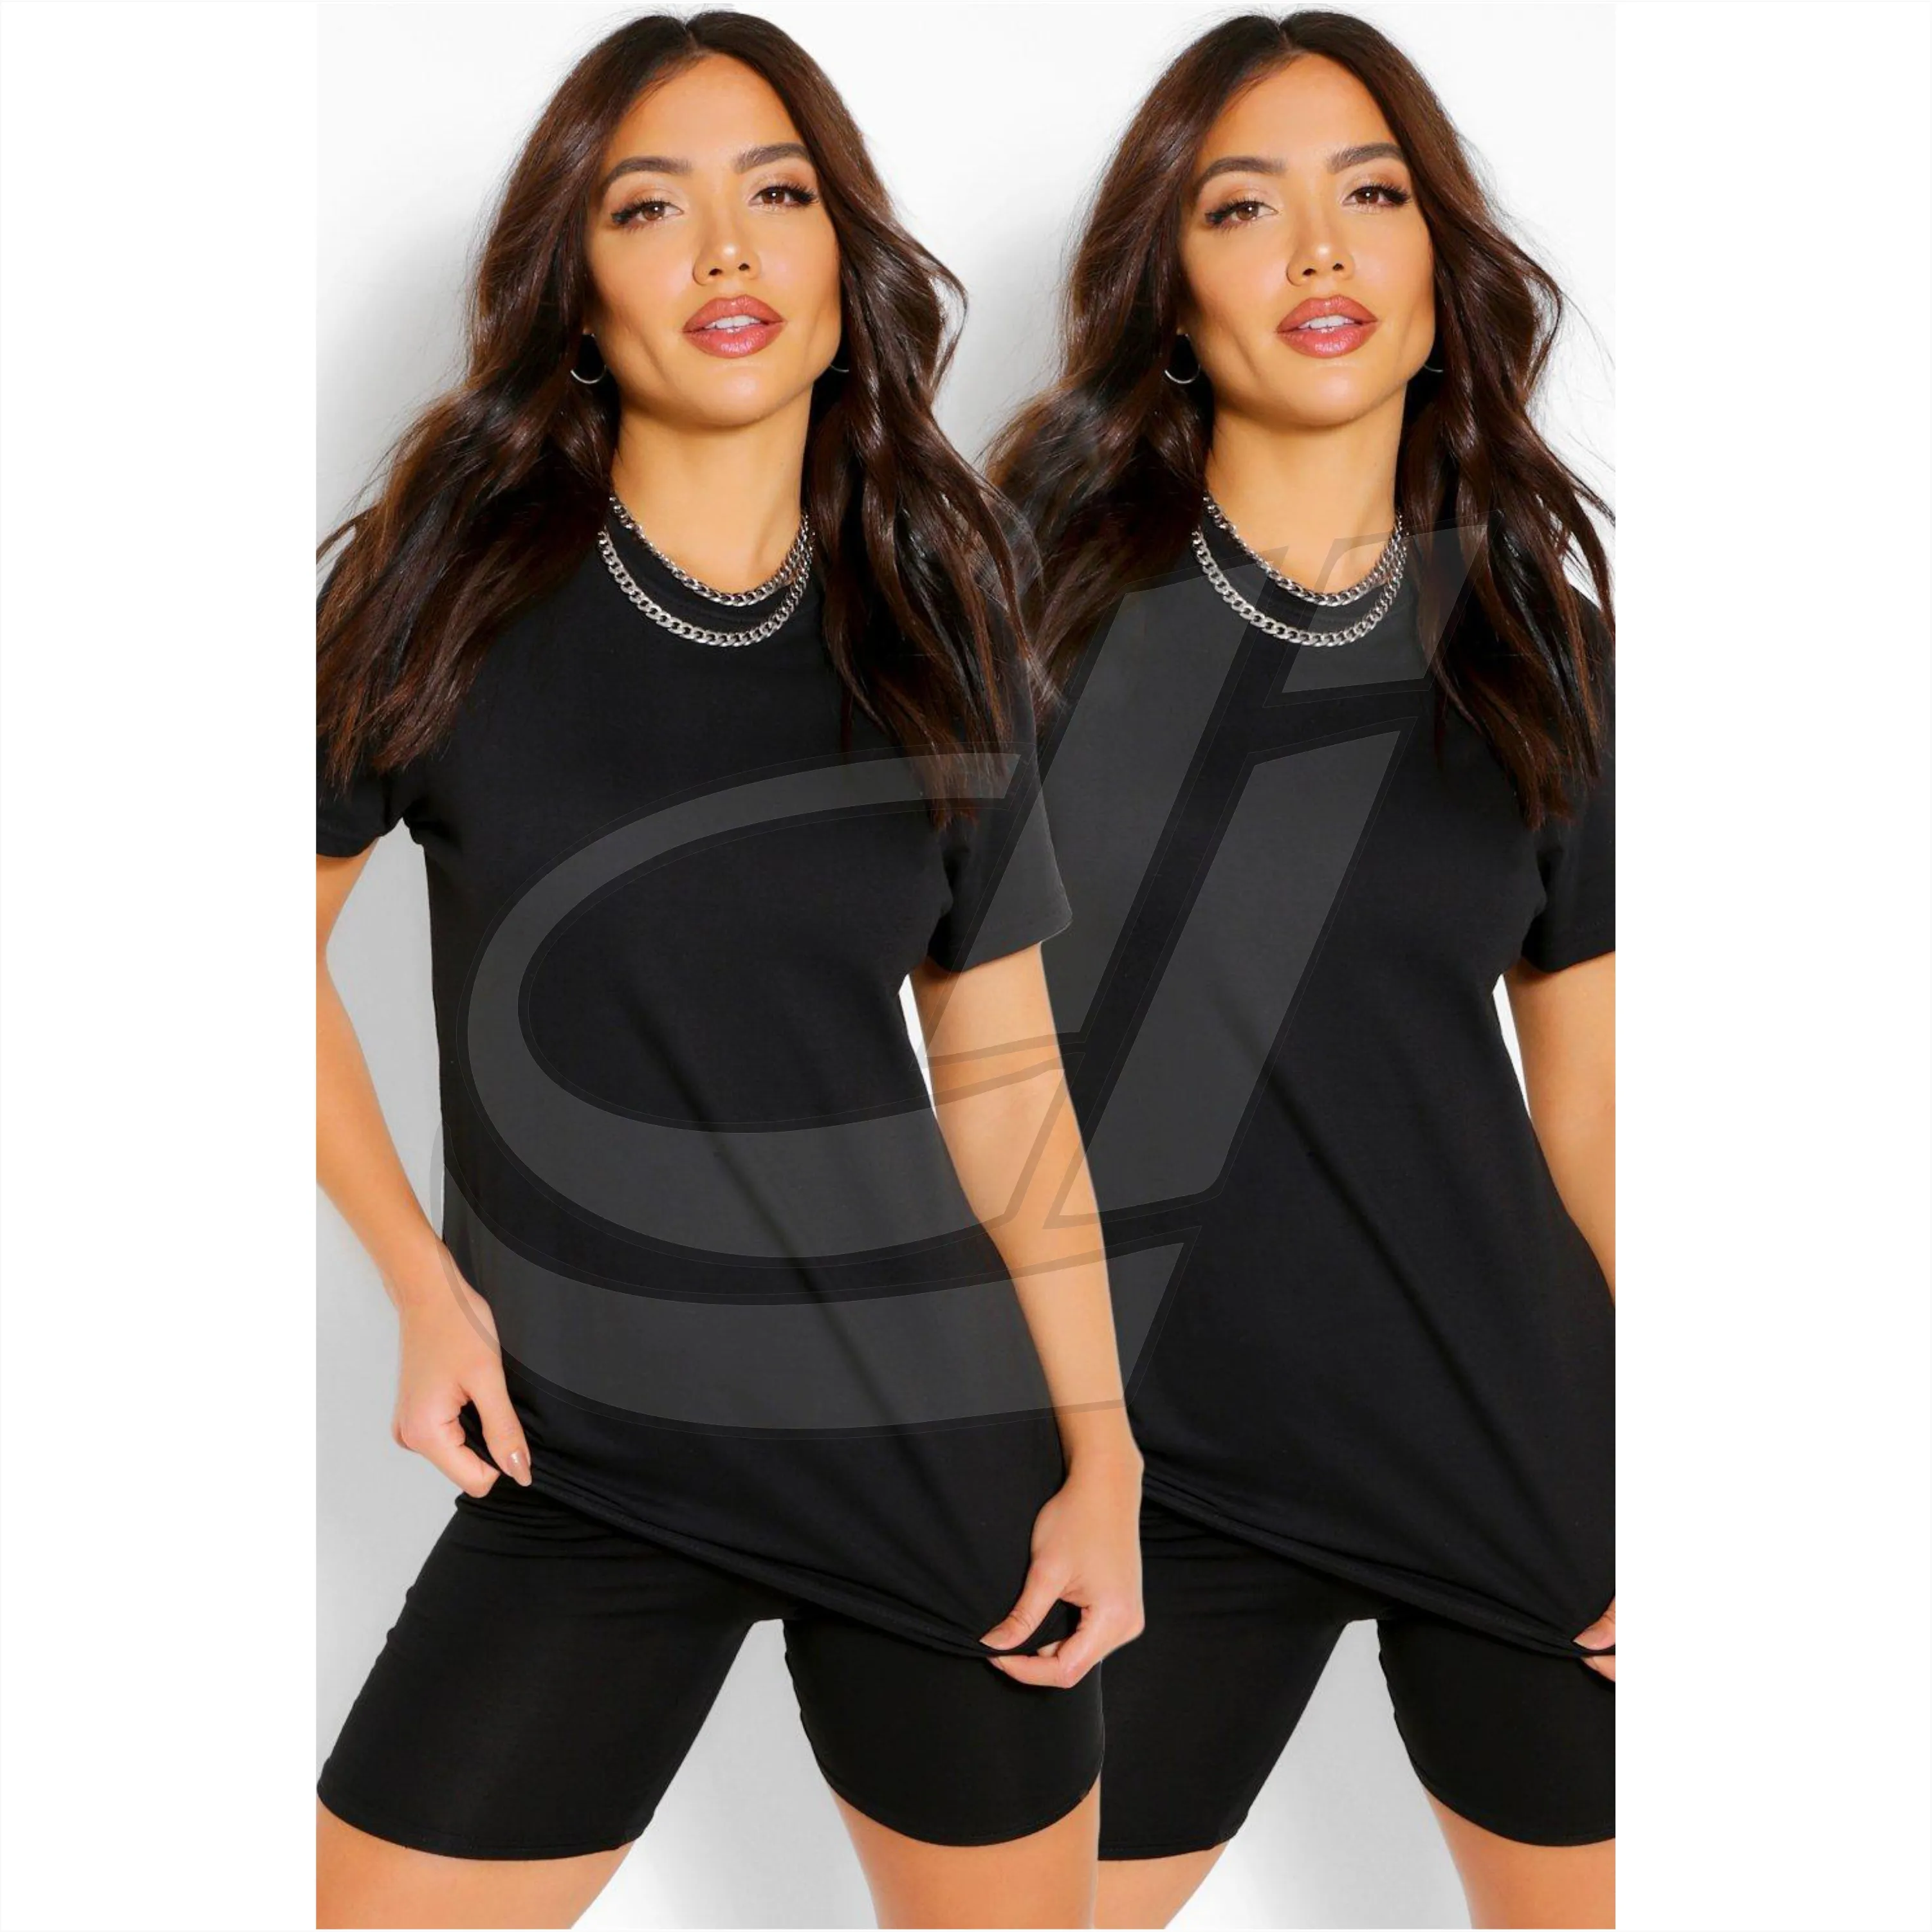 Best Selling Summer Twin Set For Ladies Women Latest Fashion Design Tie Dye Women Short T Shirt /New Summer Women 2pc twin set